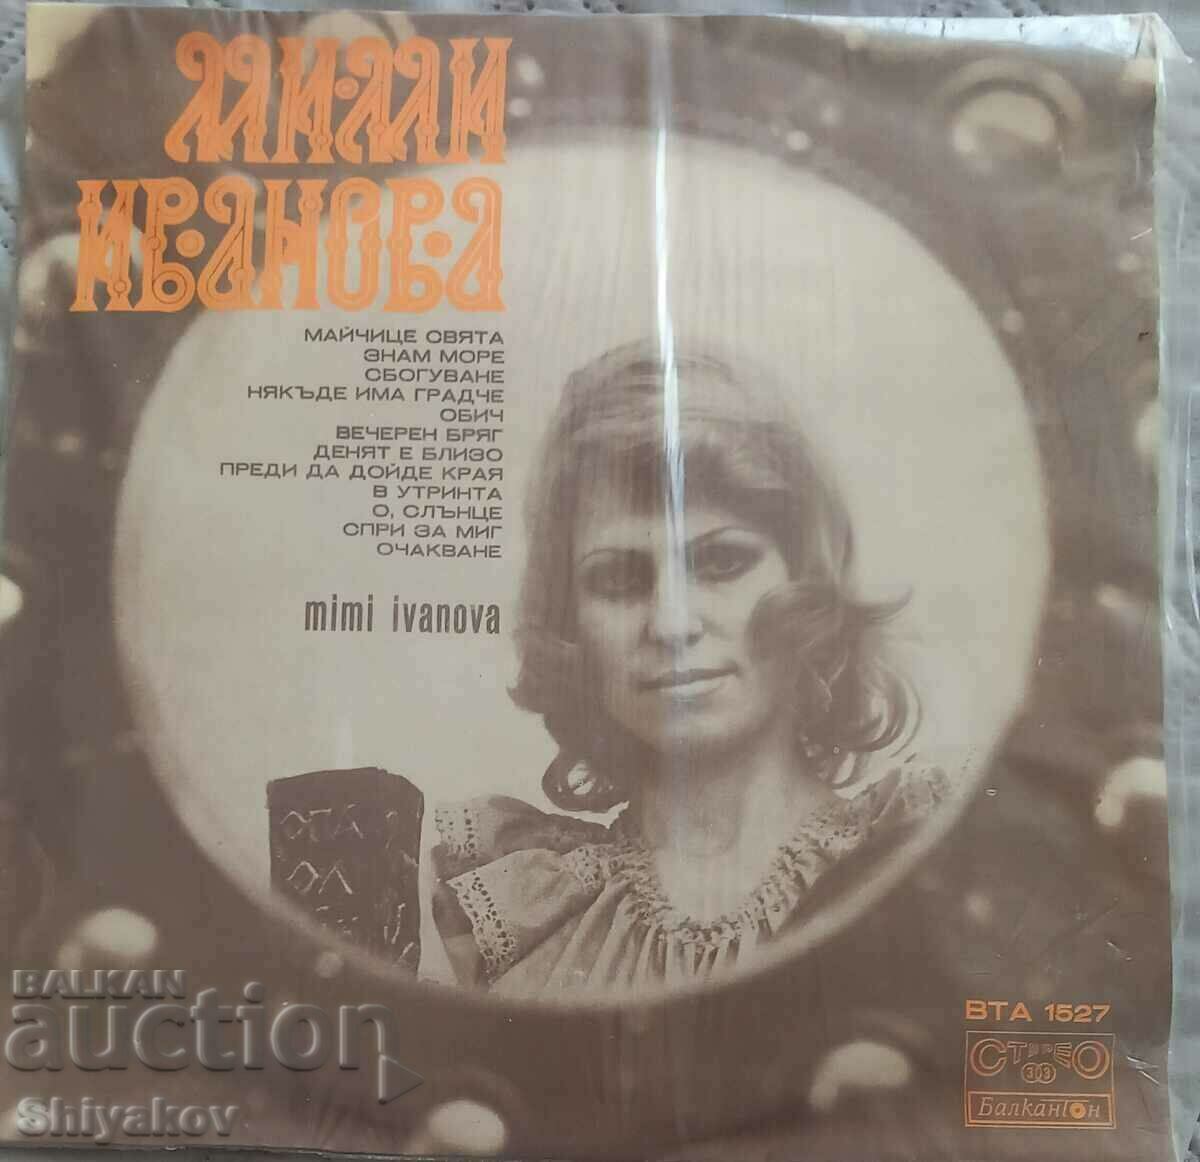 Gramophone record "Mimi Ivanova"